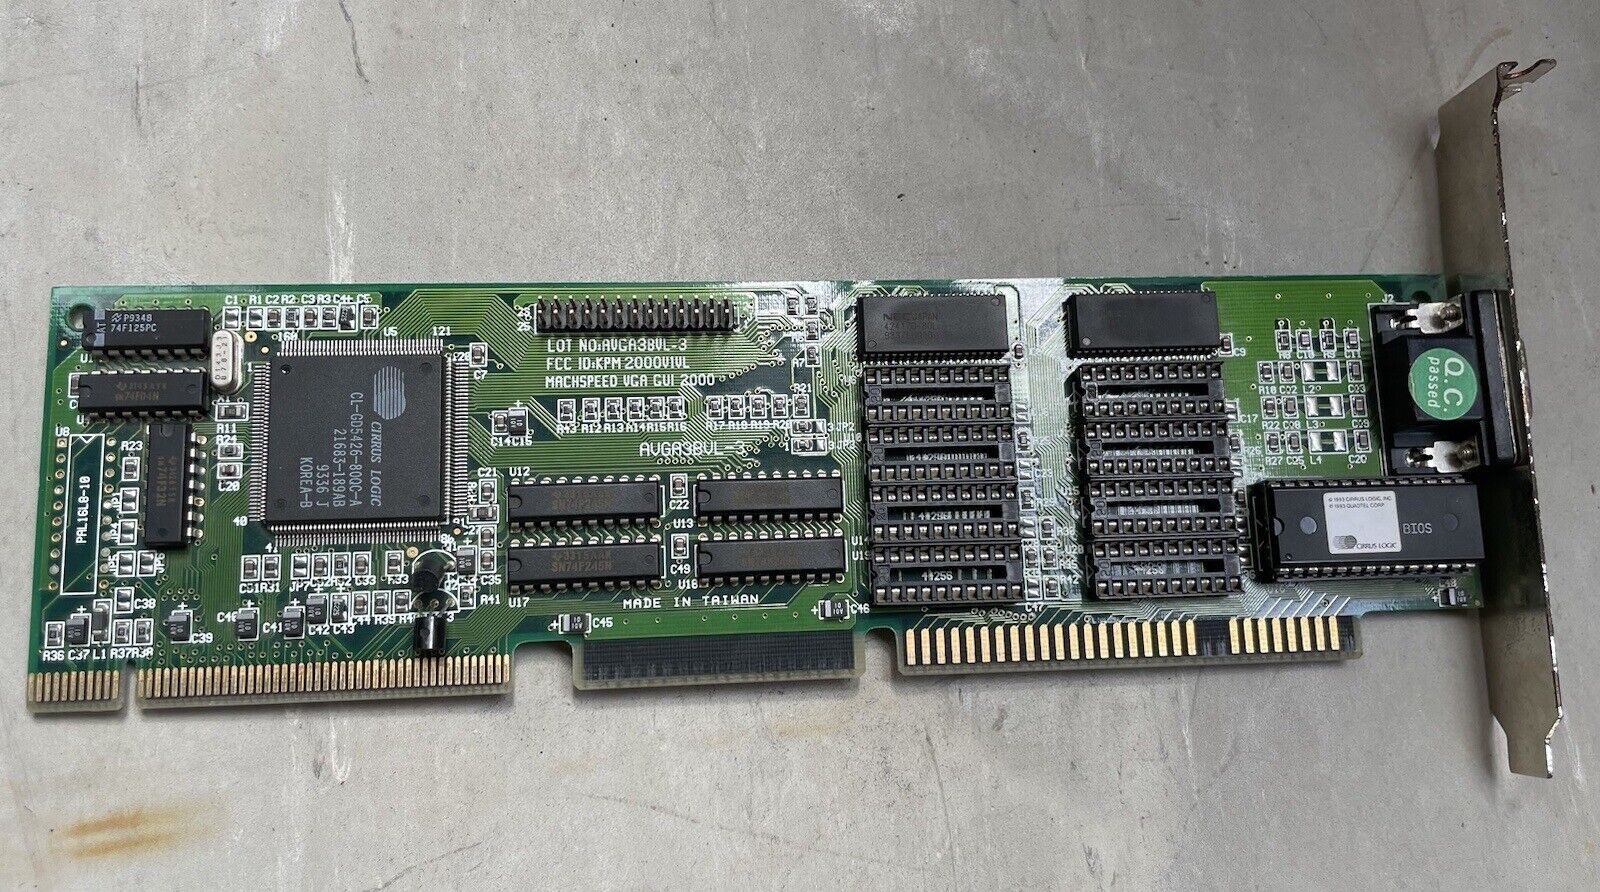 MACHSPEED VGA GUI 2000 AVGA3BVL Cirrus Logic ISA 1993 Vintage Computer